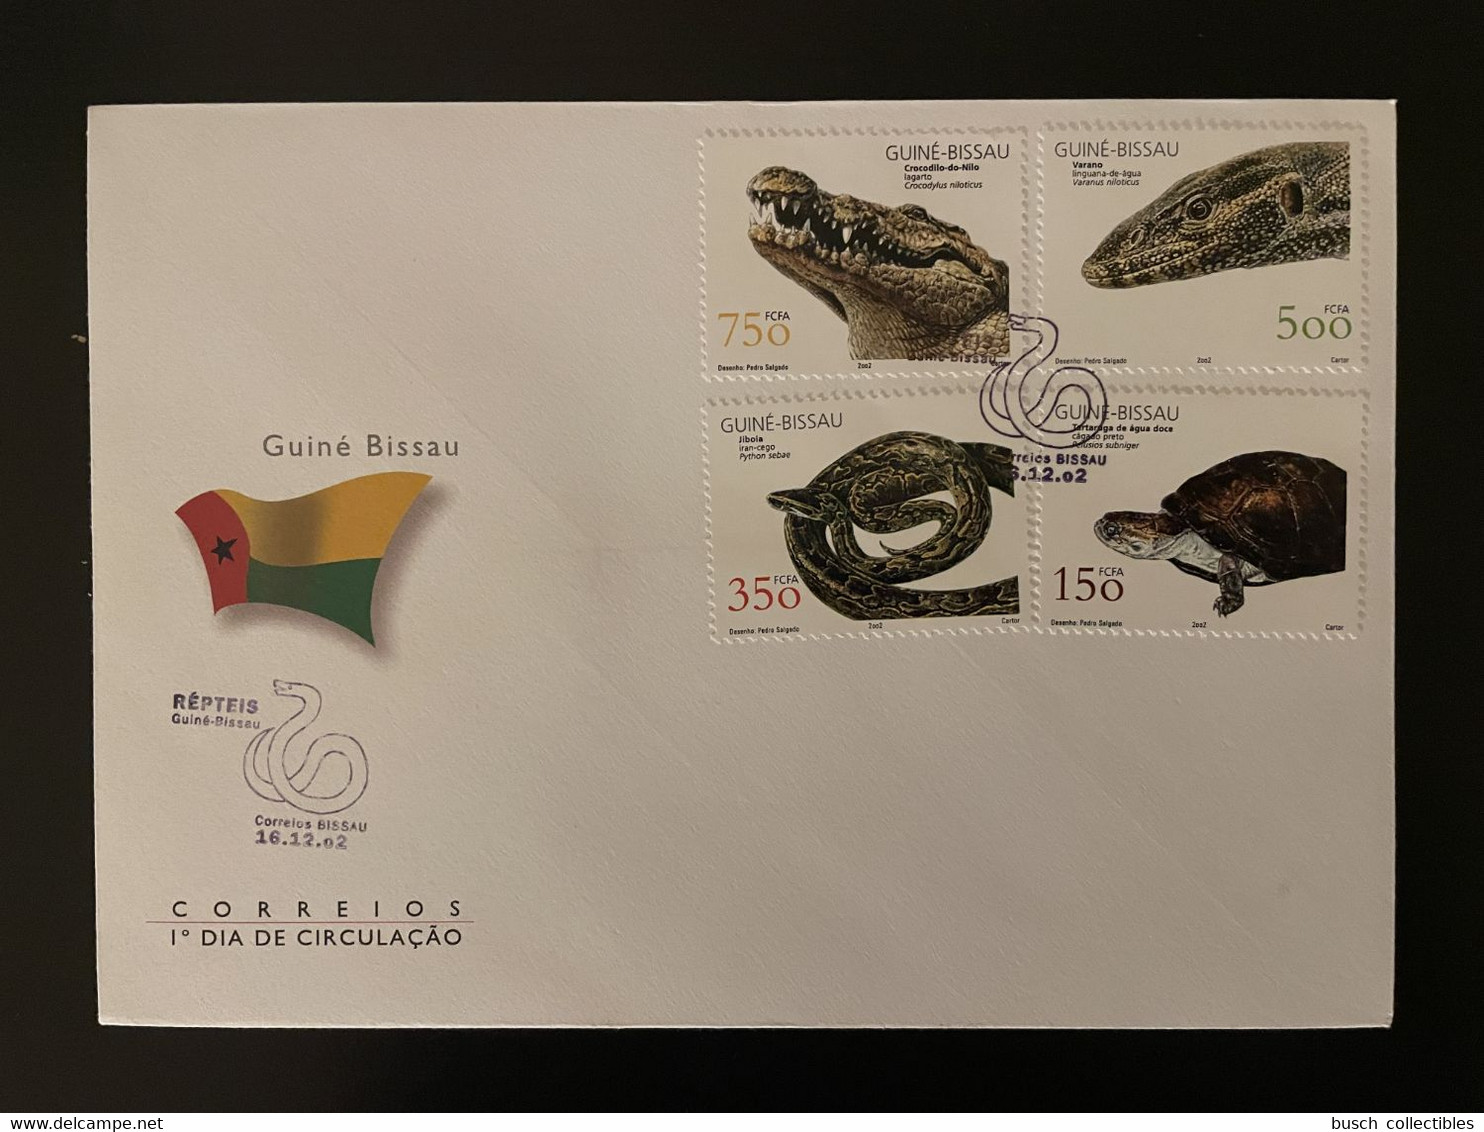 Guiné-Bissau Guinea Guinée Bissau 2002 Mi. 2029 - 2032 FDC Reptiles Reptilien Schildkröte Schlange Snake Serpent Tortue - Schlangen